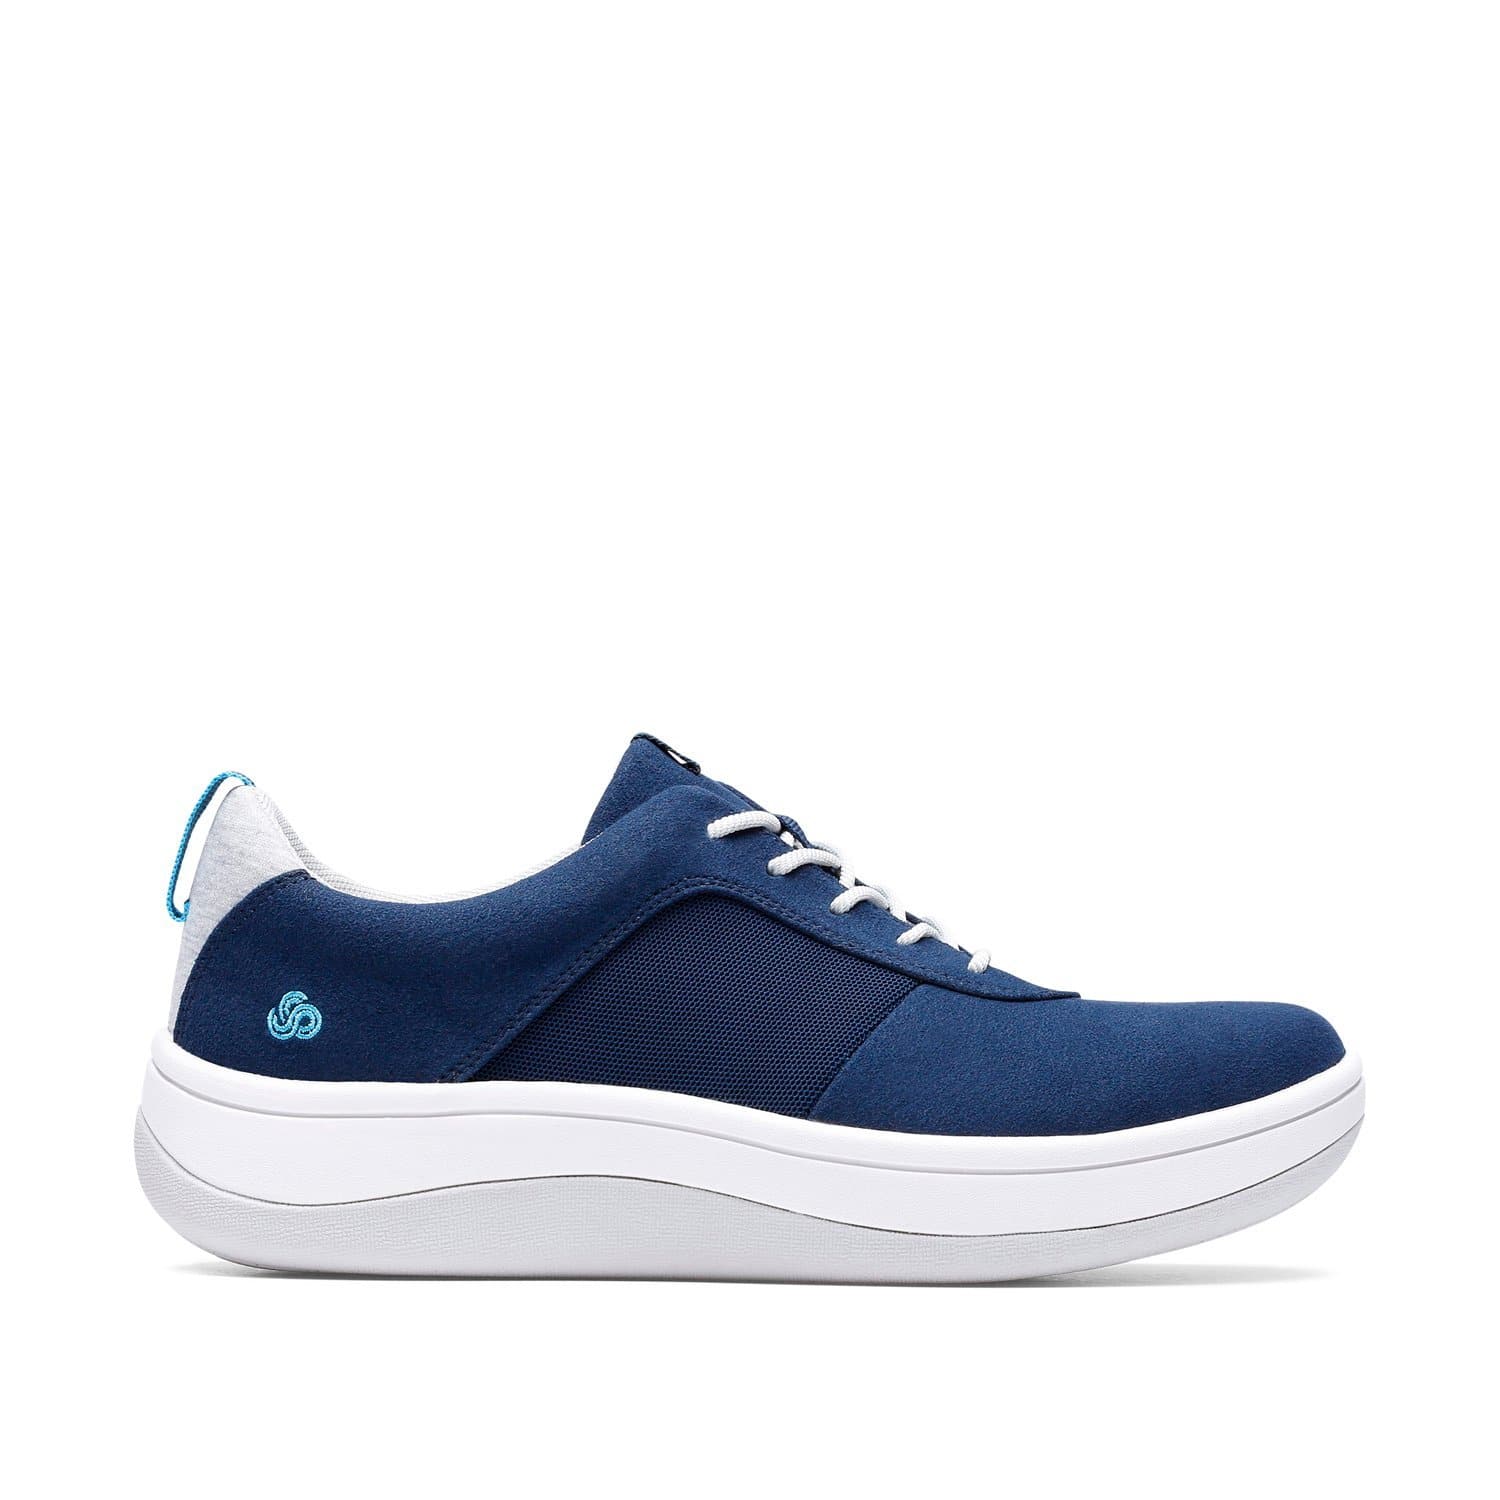 Clarks-Arla-Step.-Women's-Shoes-Navy-26145926